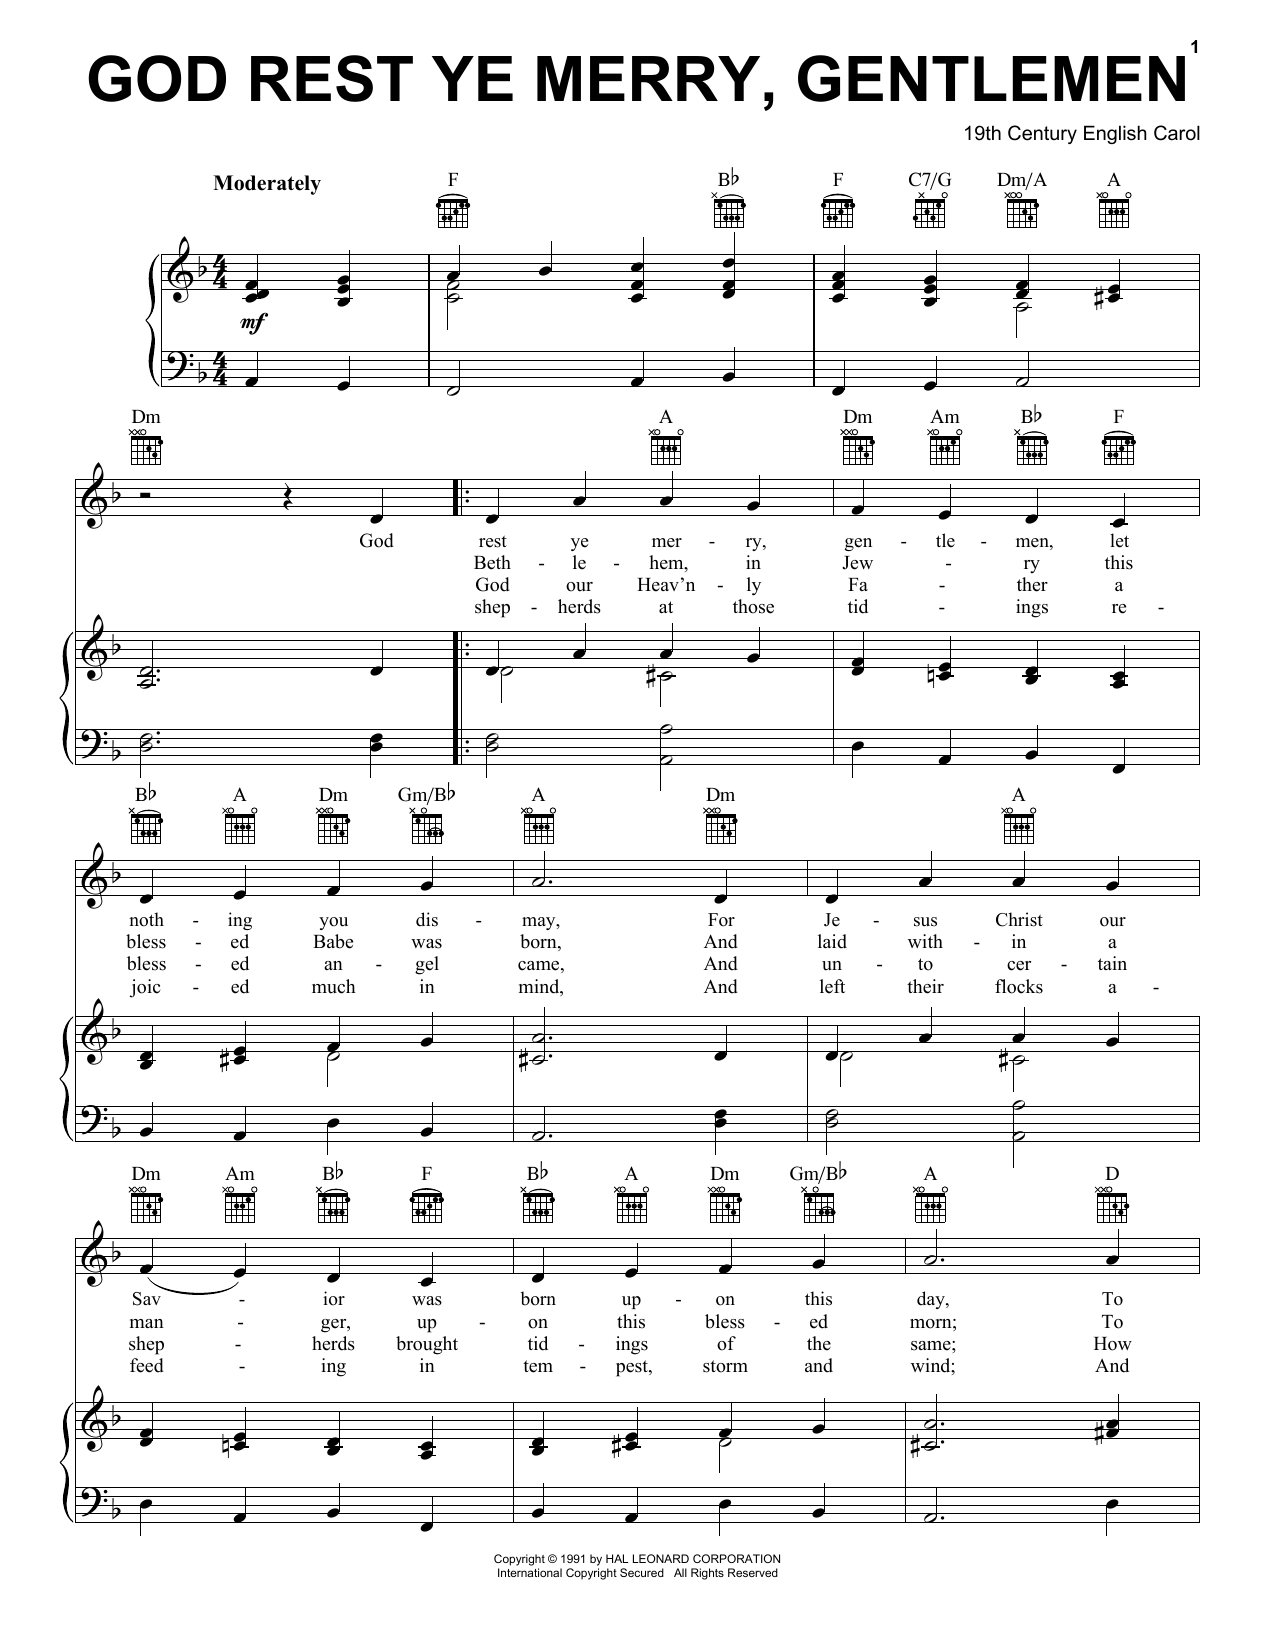 19th Century English Carol God Rest Ye Merry, Gentlemen sheet music notes and chords. Download Printable PDF.